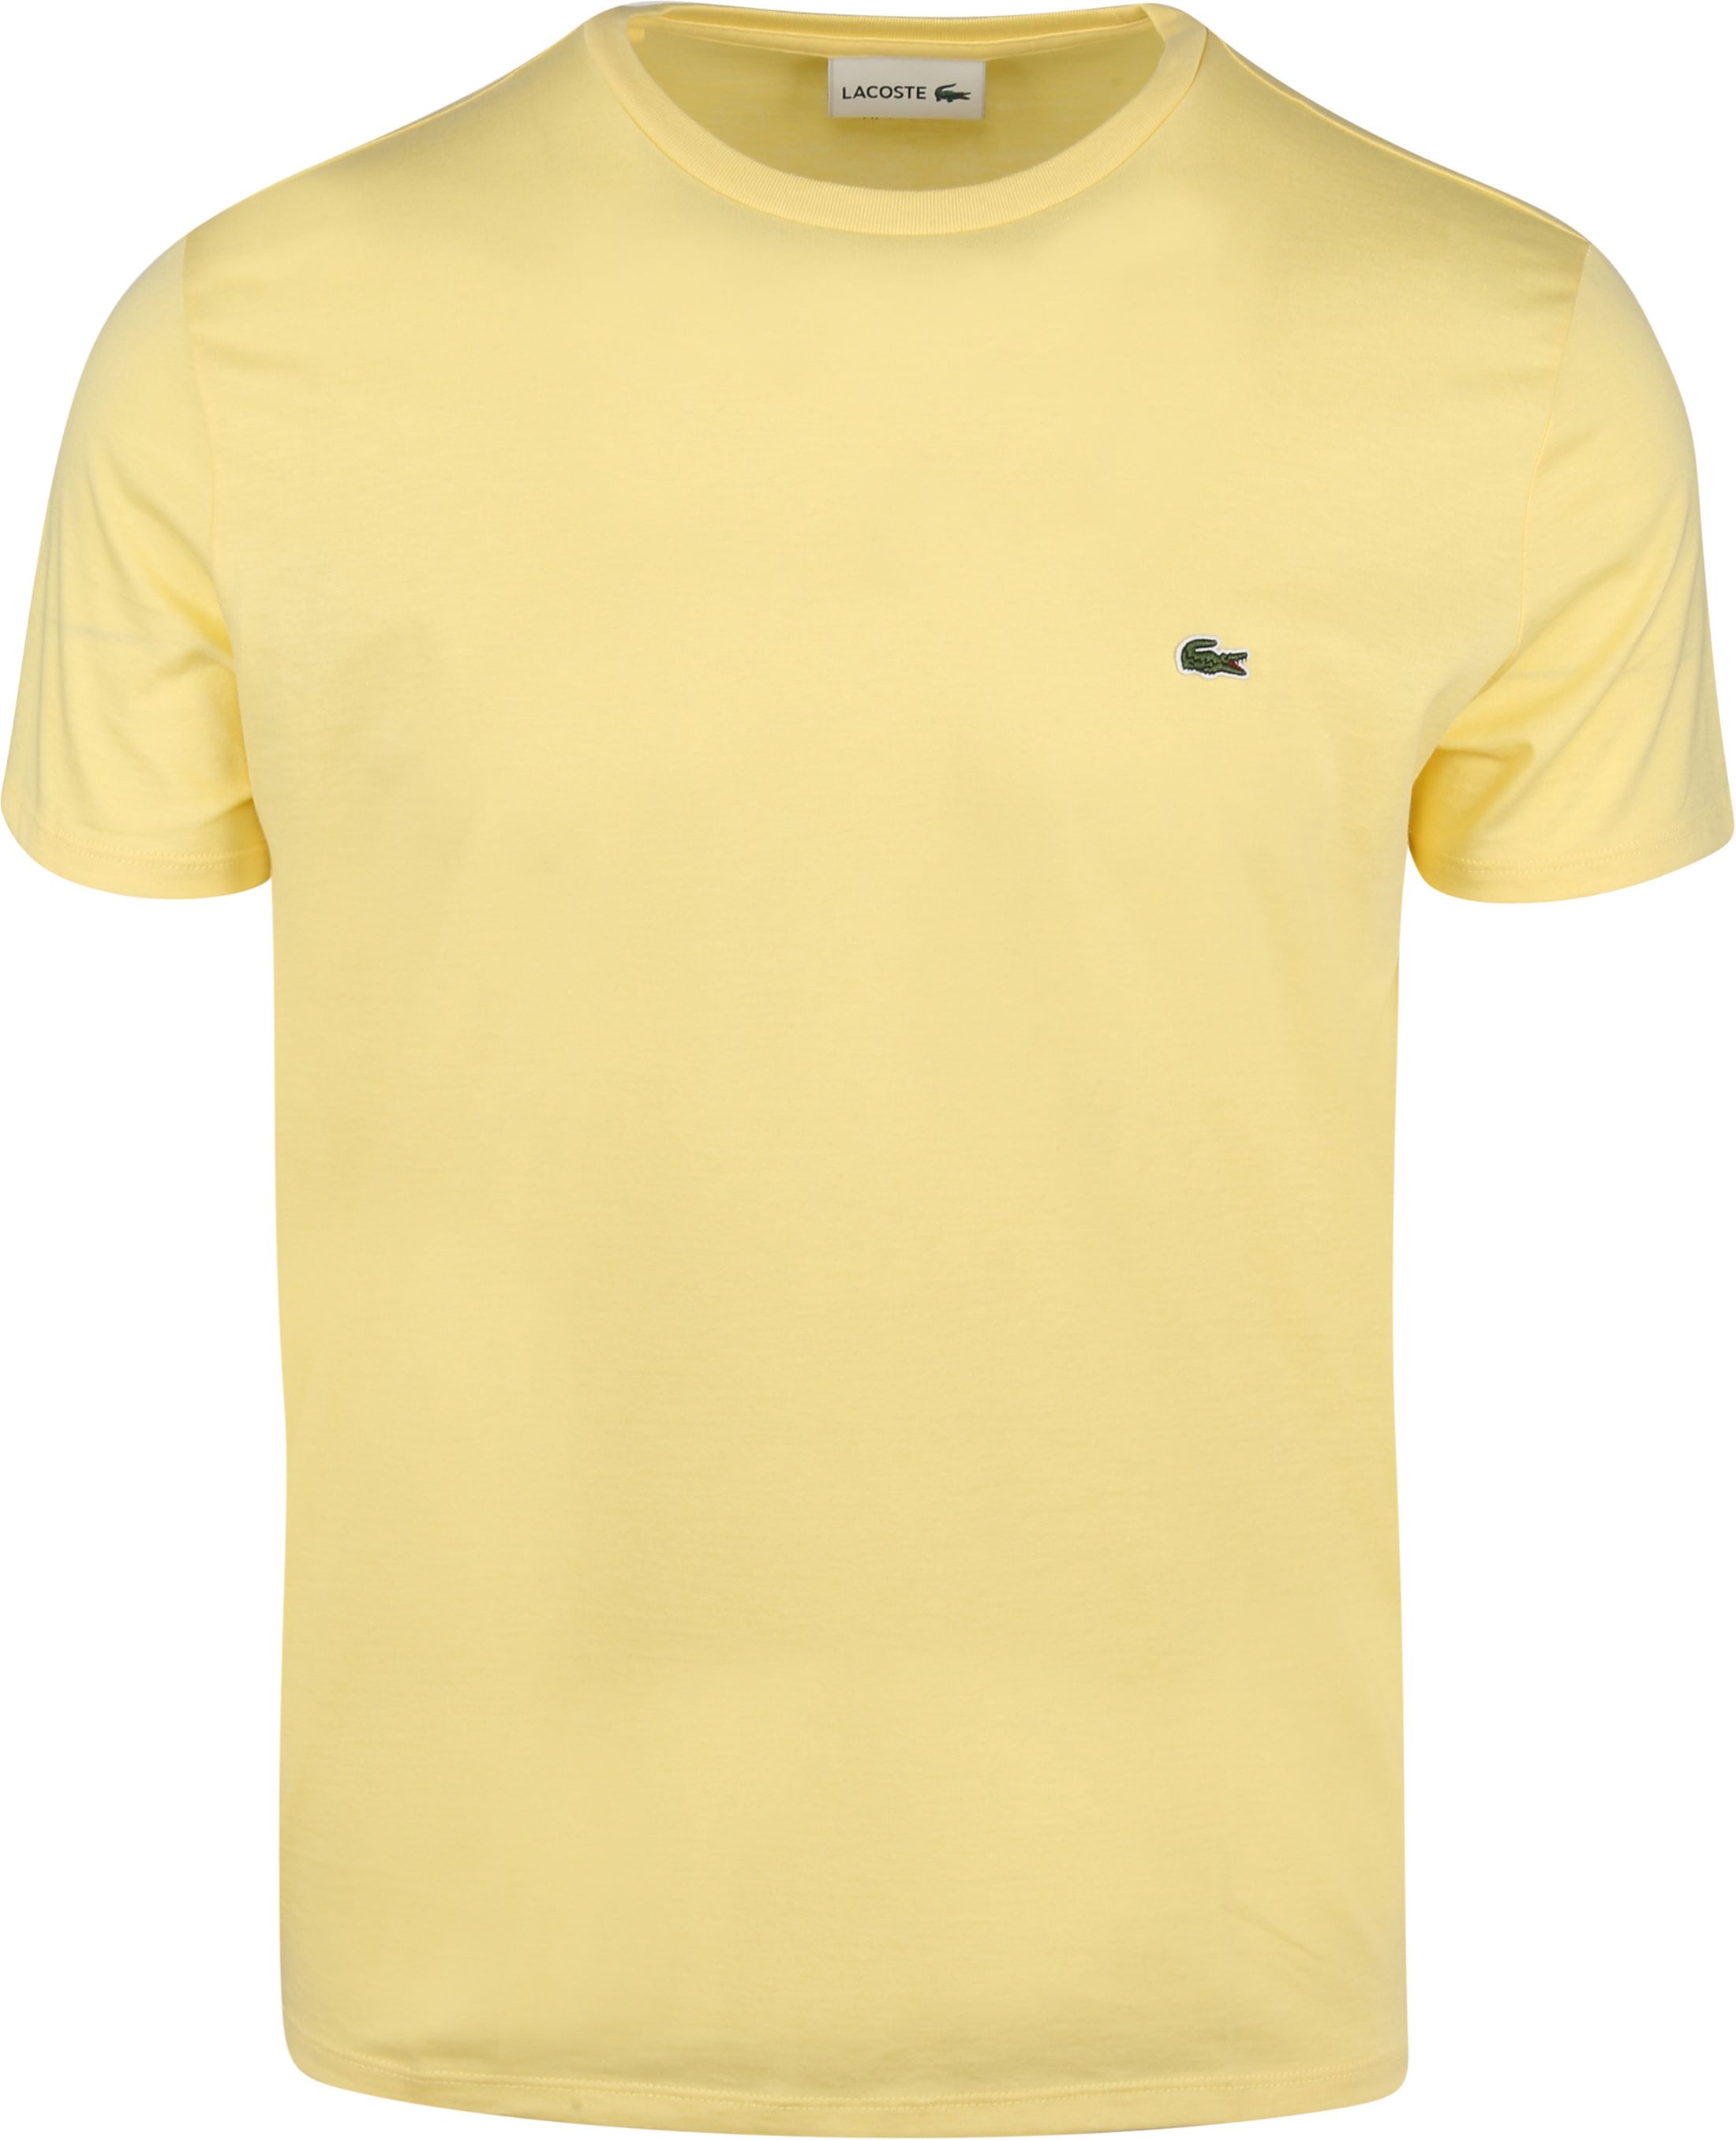 Lacoste T-Shirt Yellow size L